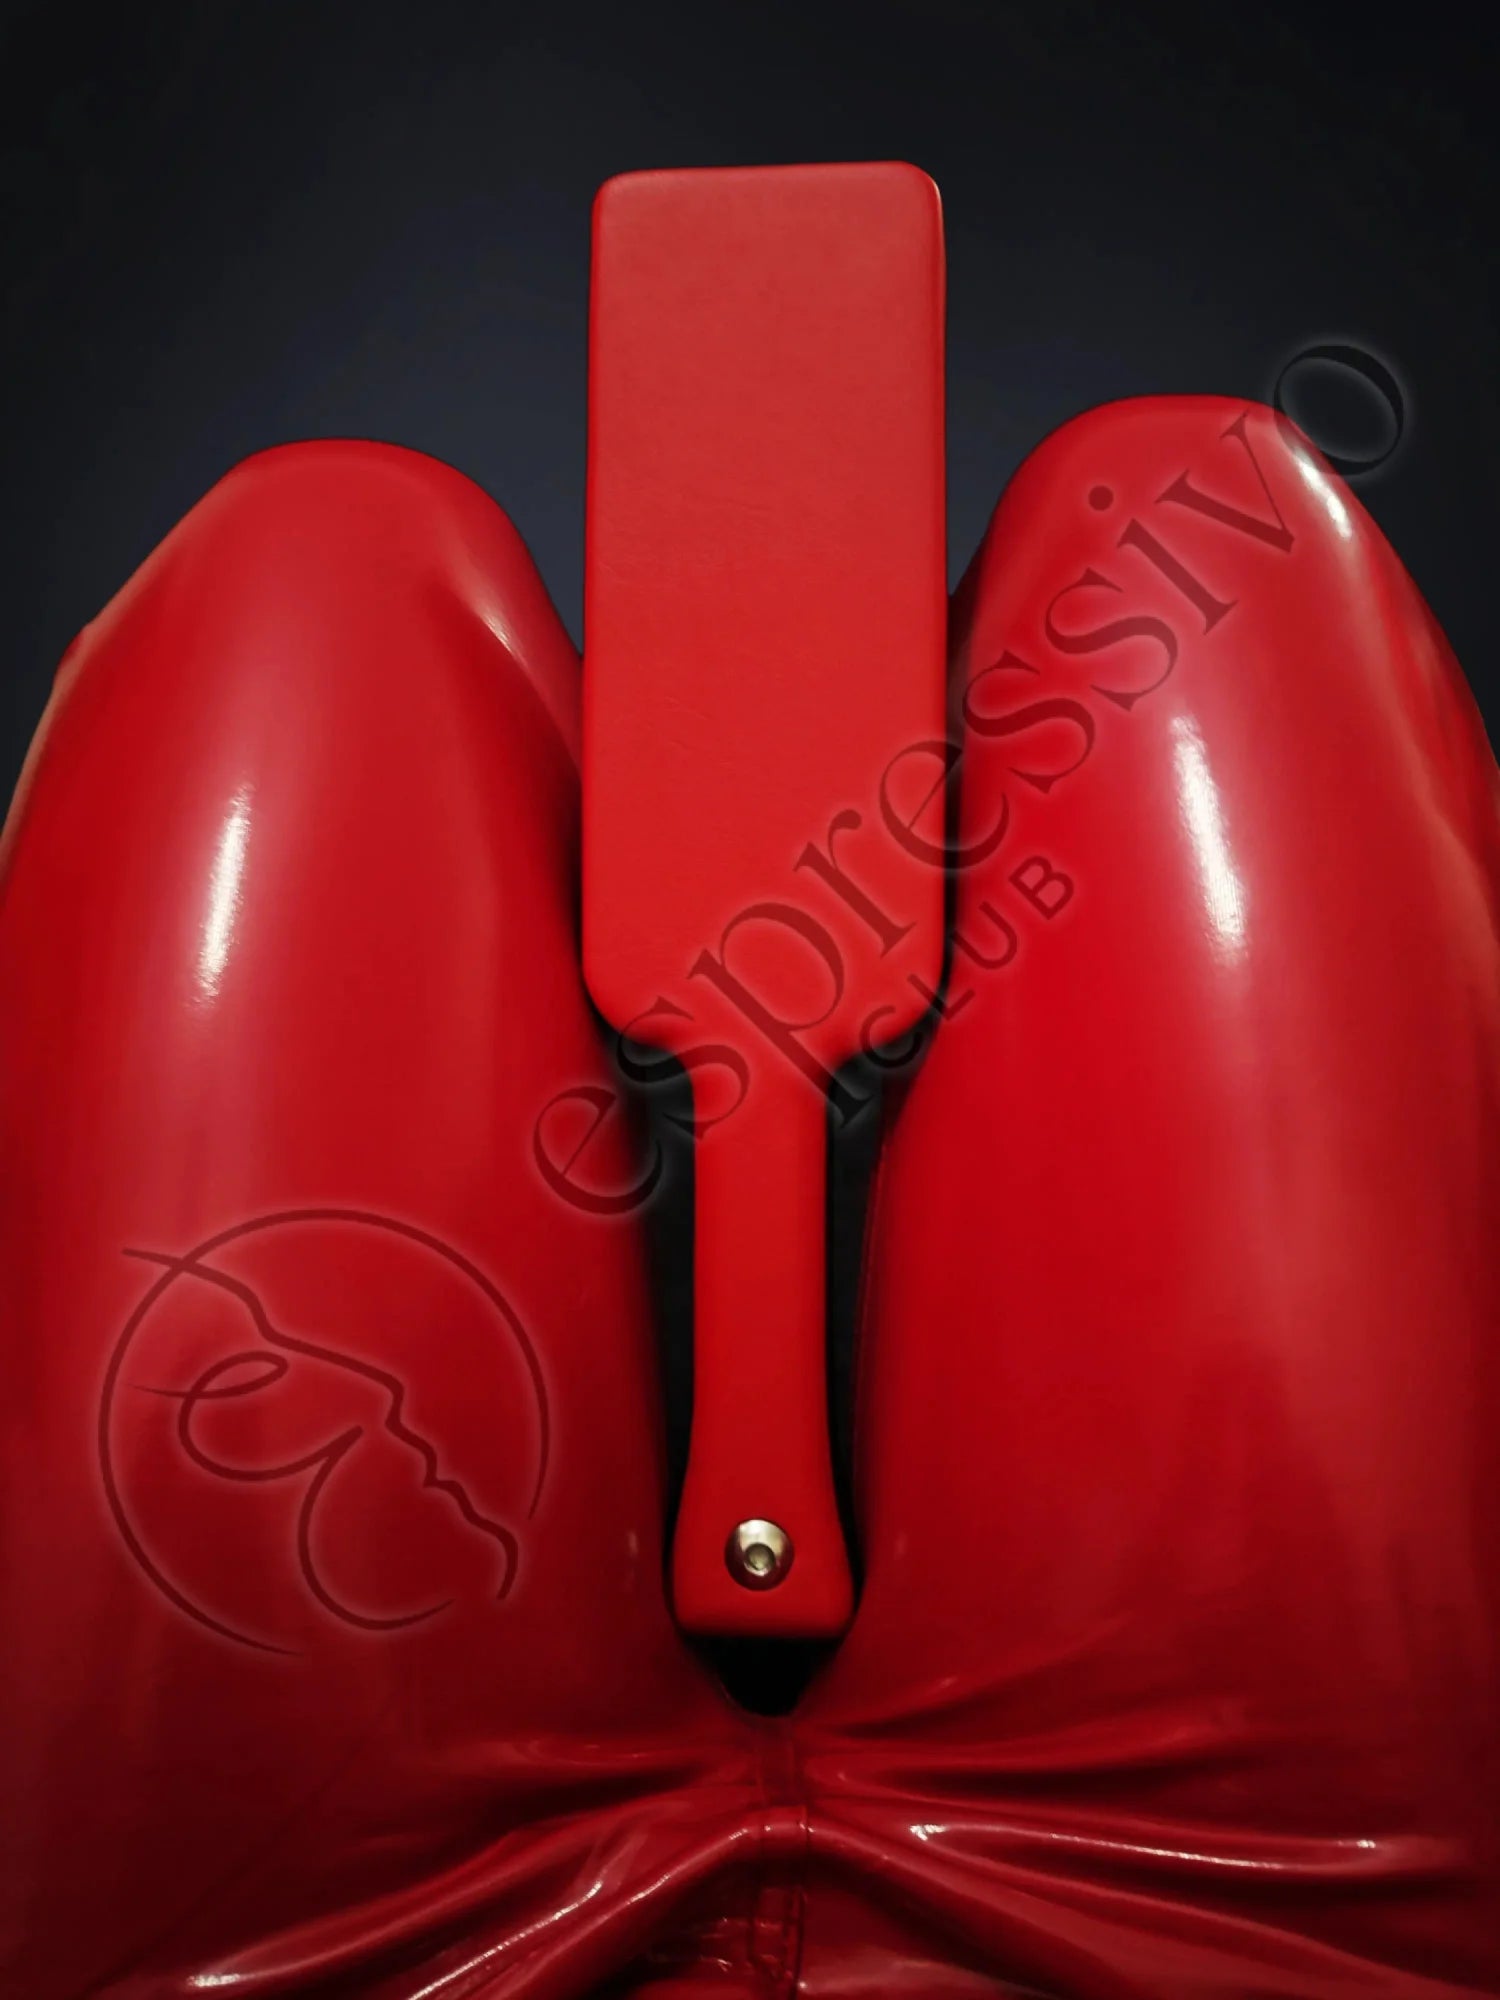 Red BDSM Paddle - Spanking tool